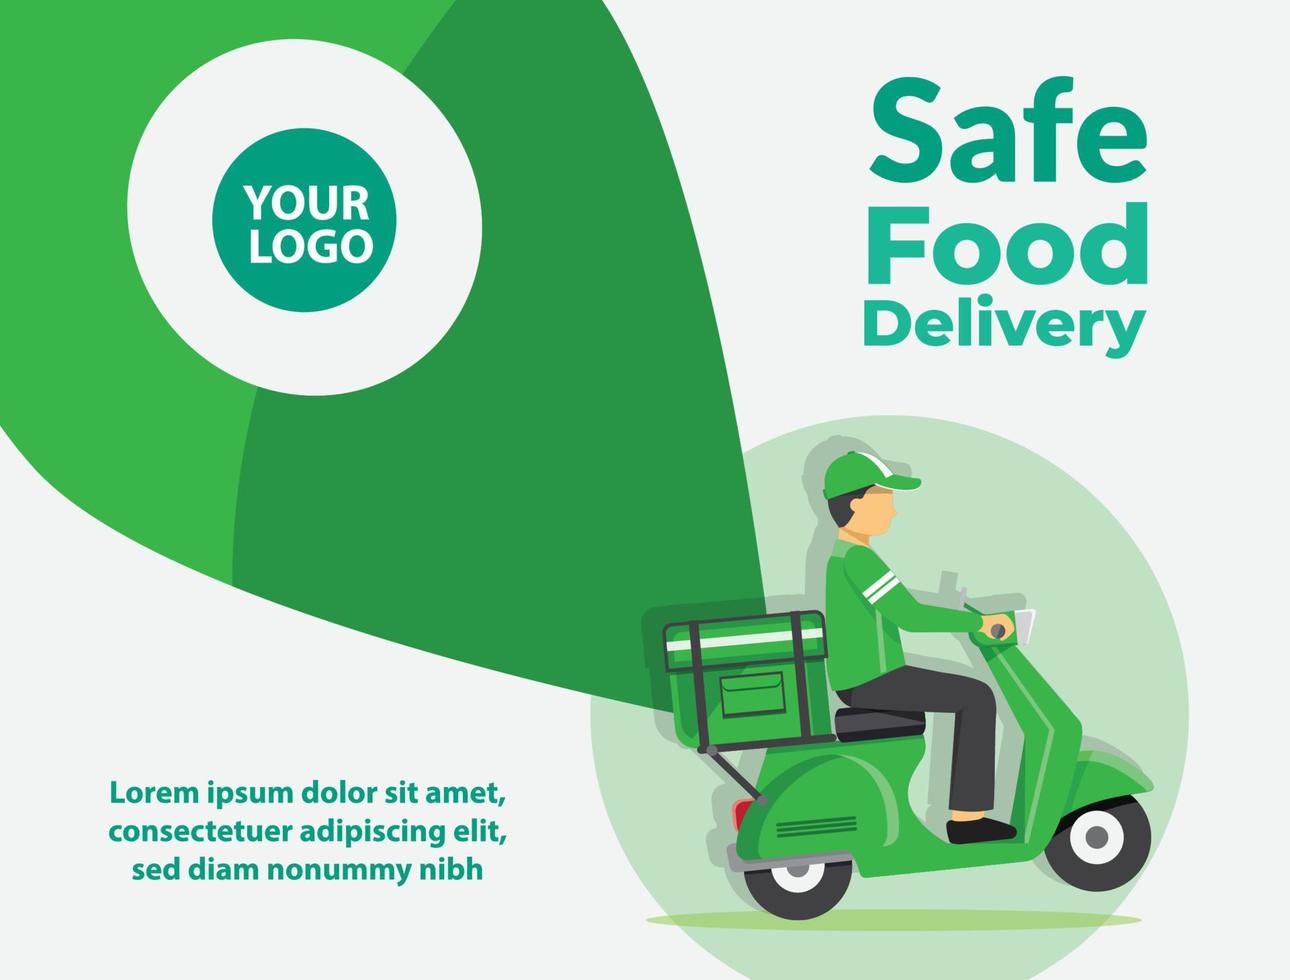 servicio de entrega de alimentos, entrega de comida rápida, servicio de entrega de scooter, ilustración vectorial vector